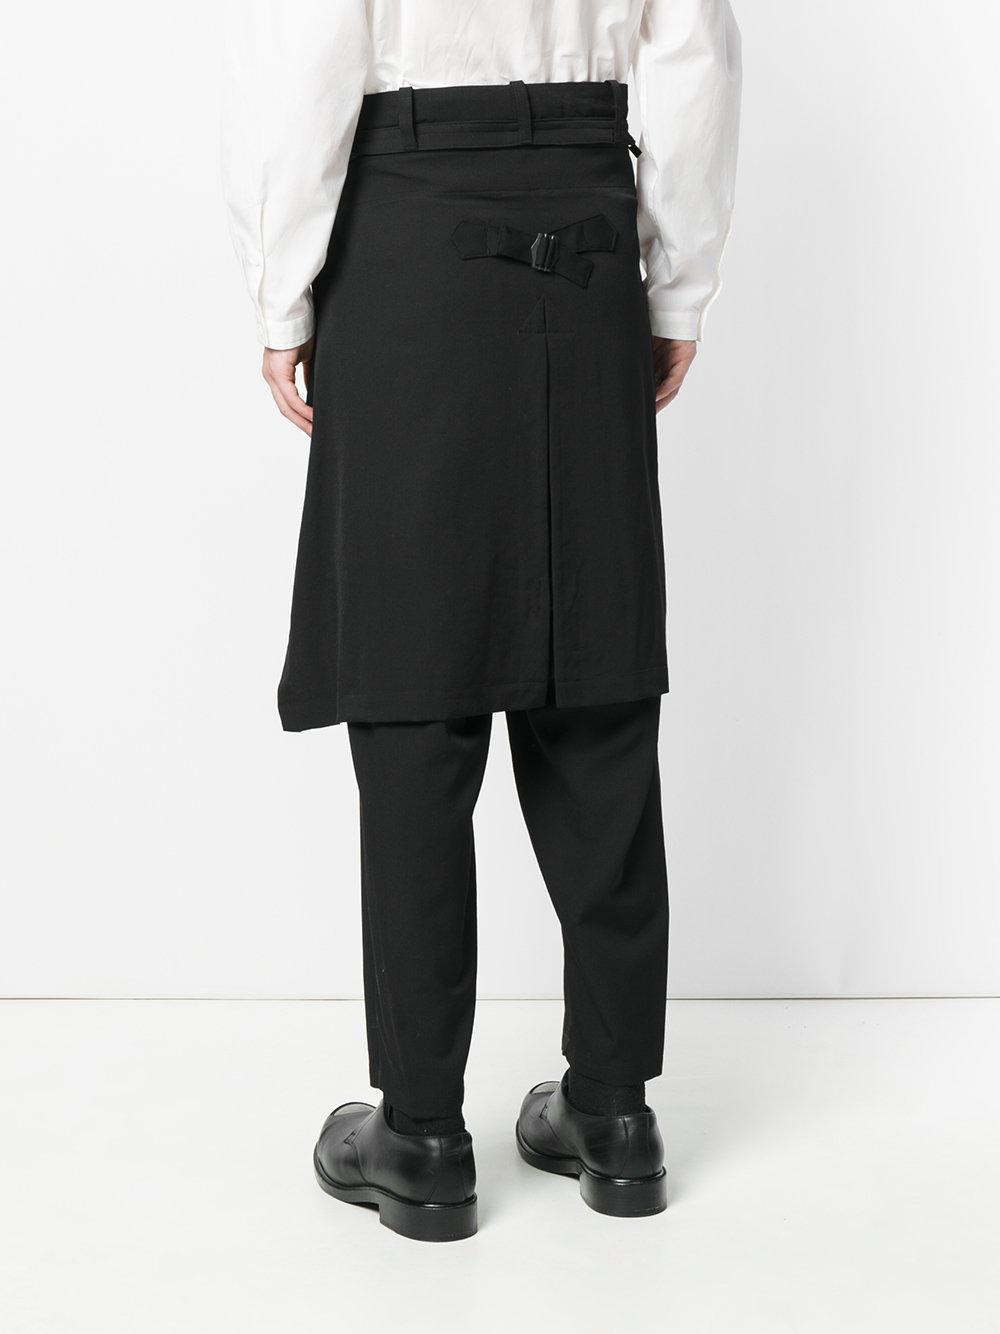 Yohji Yamamoto Wrap Skirt Trousers in Black for Men - Lyst